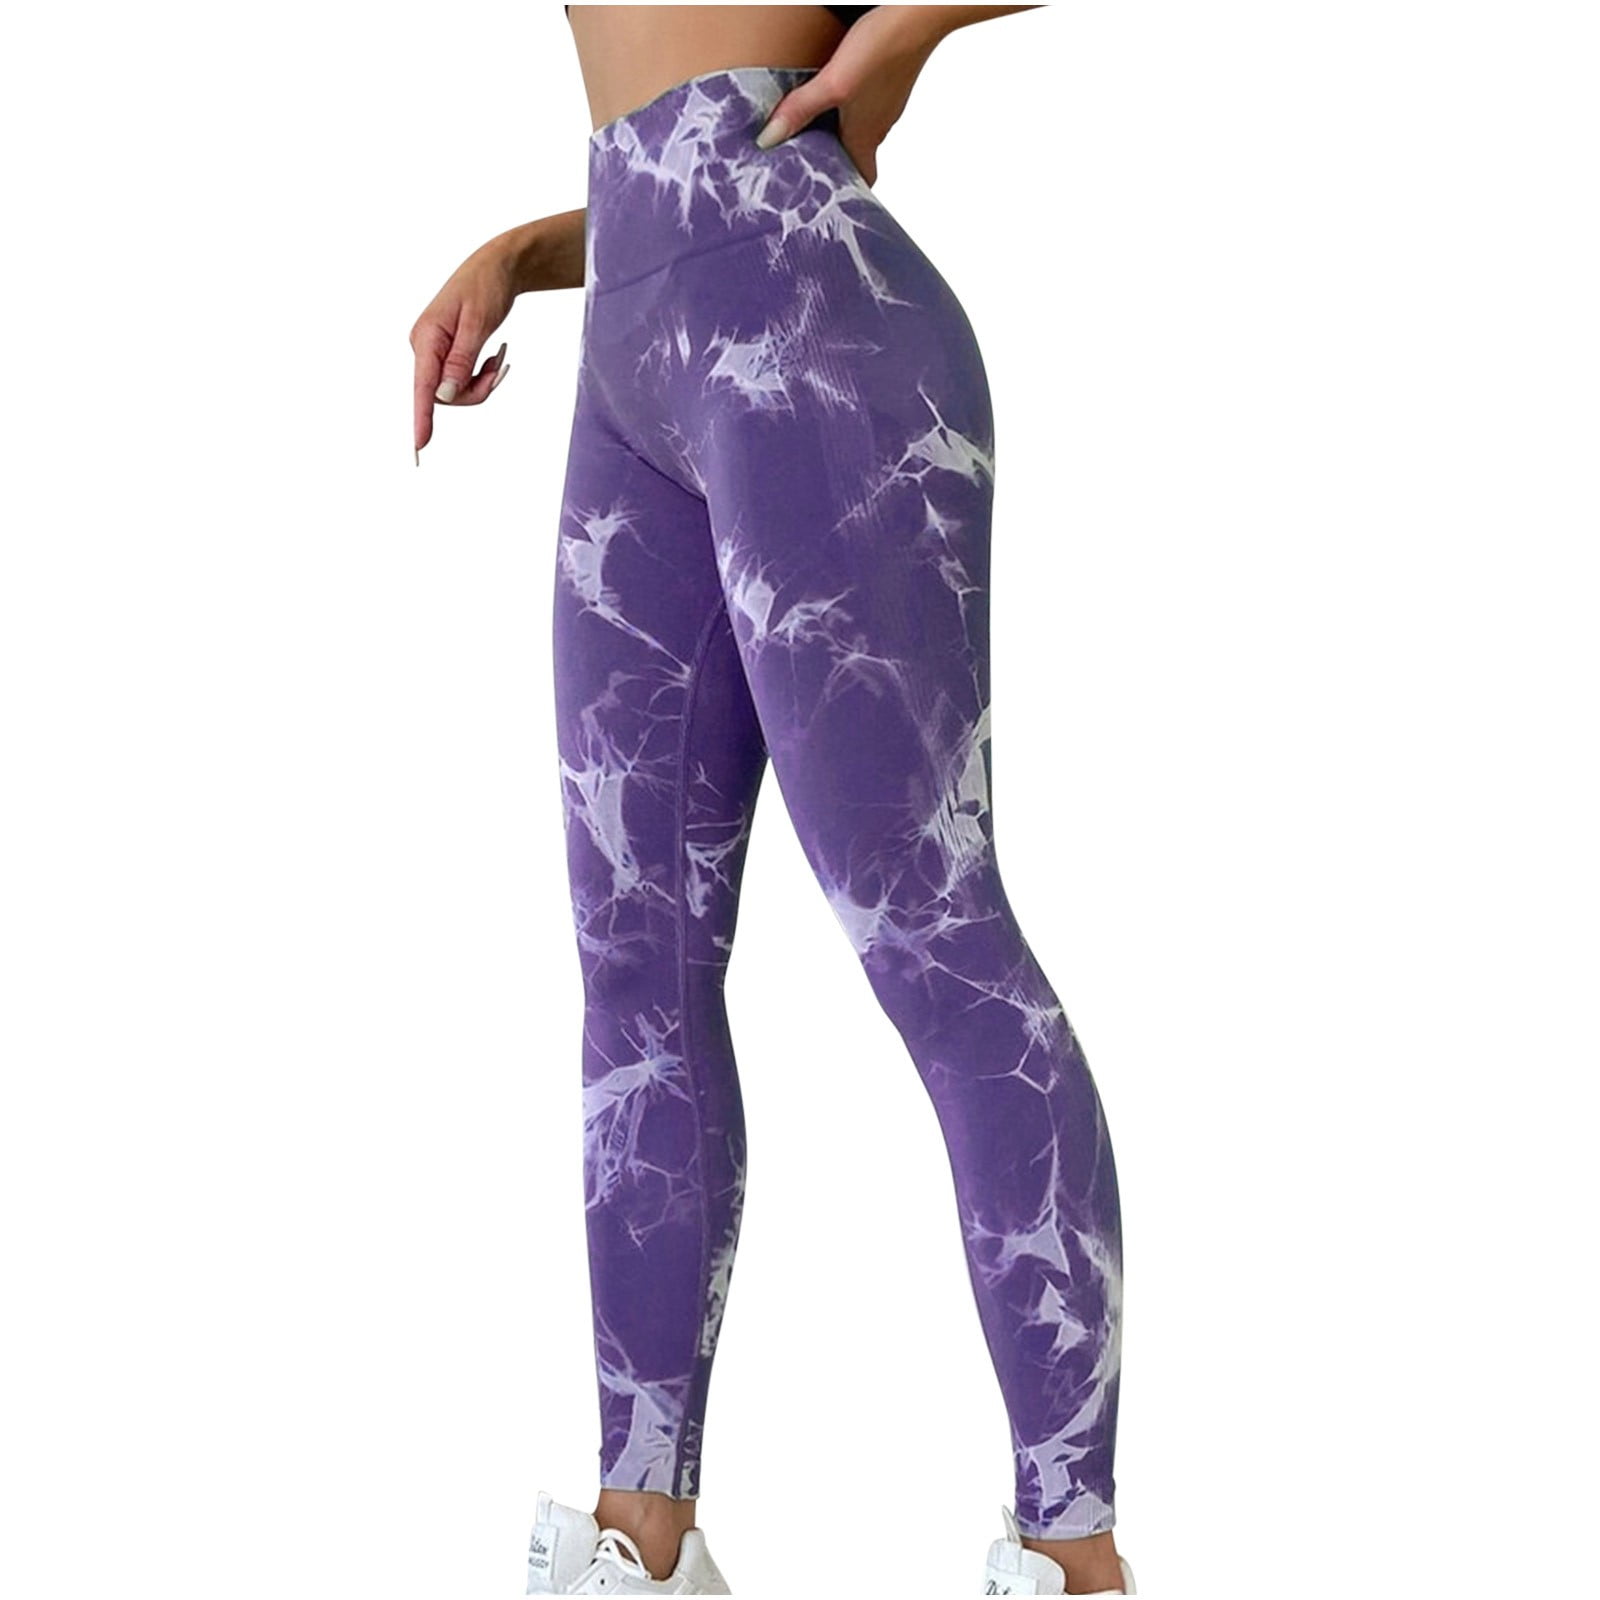 Hfyihgf Tie Dye Seamless Leggings for Women High Waist Yoga Pants Scrunch  Butt Lifting Elastic Tights(Purple,S)